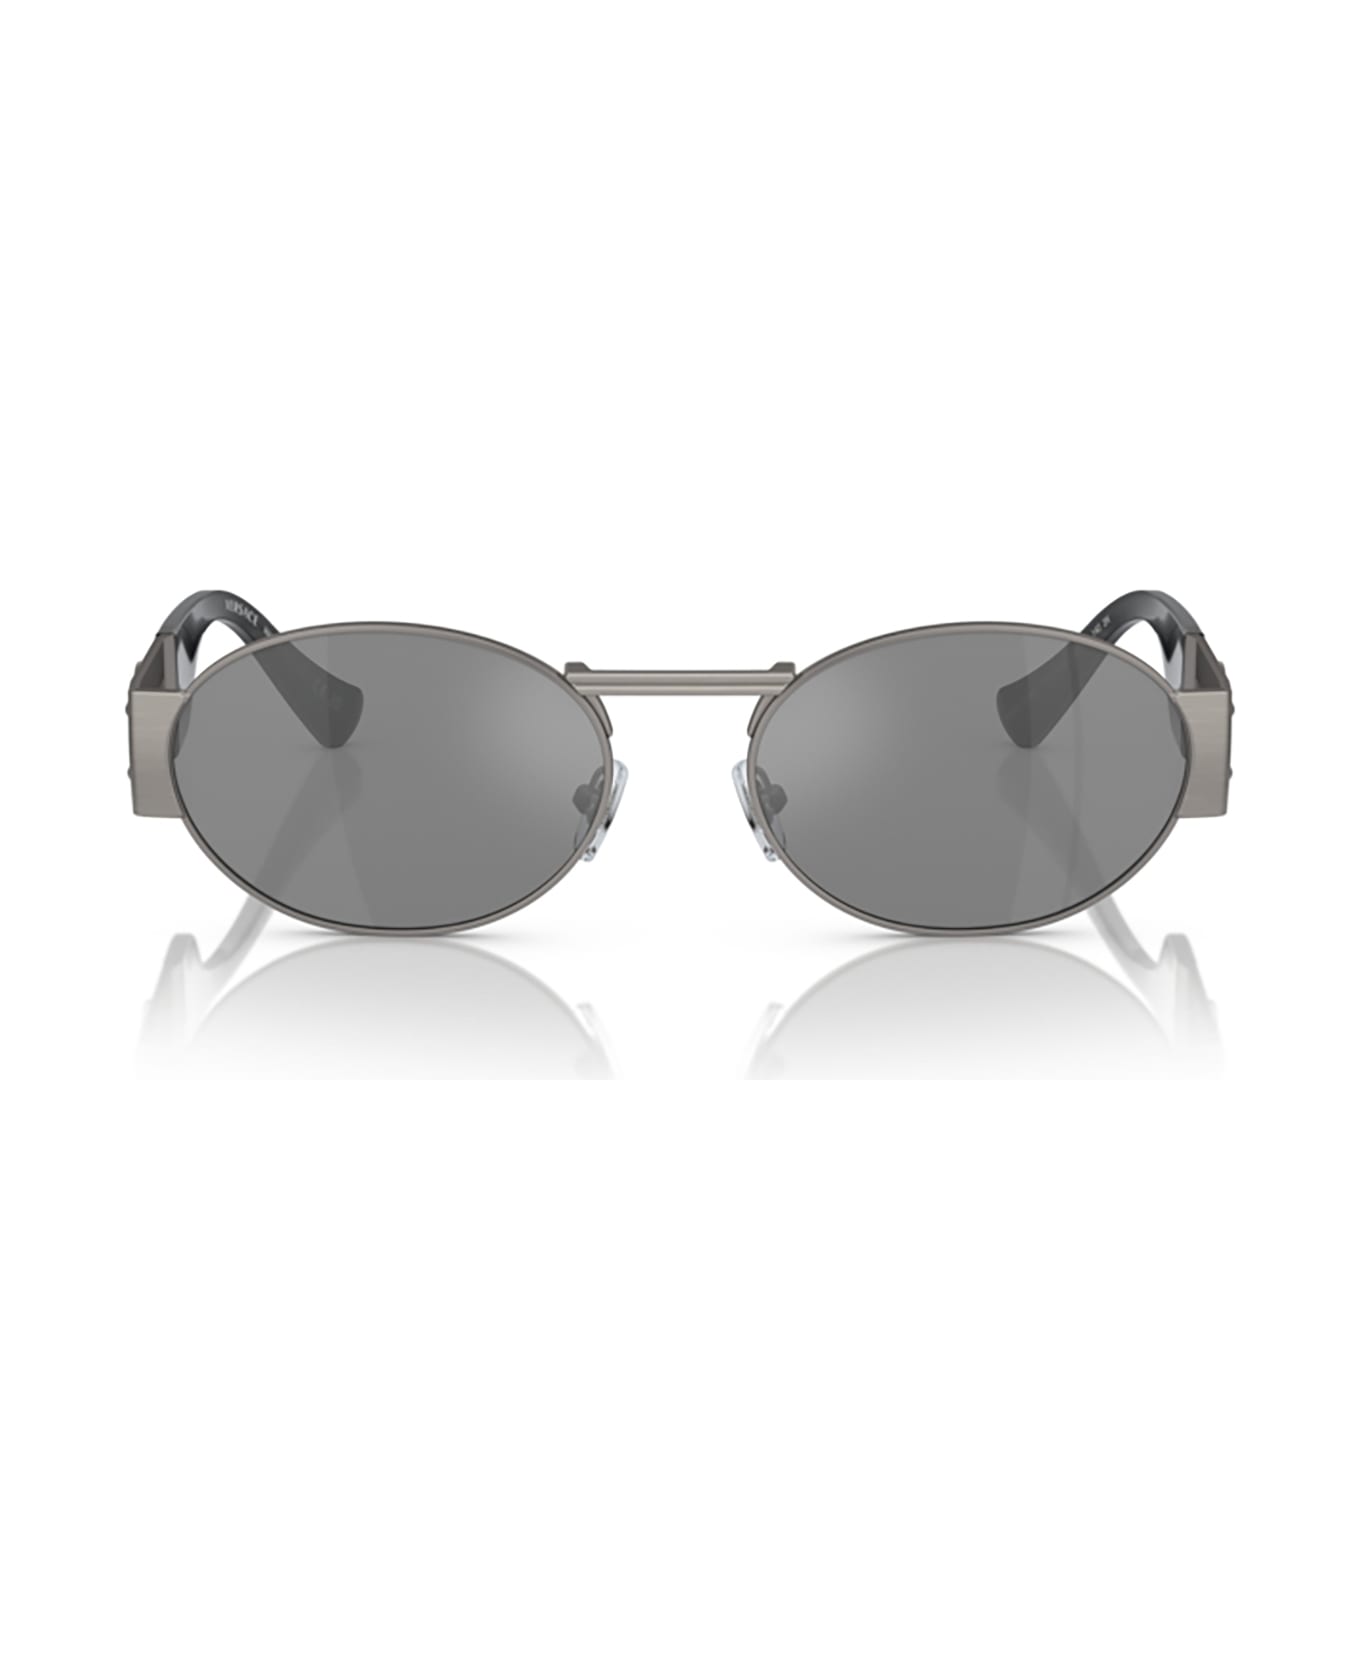 Versace Eyewear Ve2264 Matte Gunmetal Sunglasses - Matte gunmetal サングラス